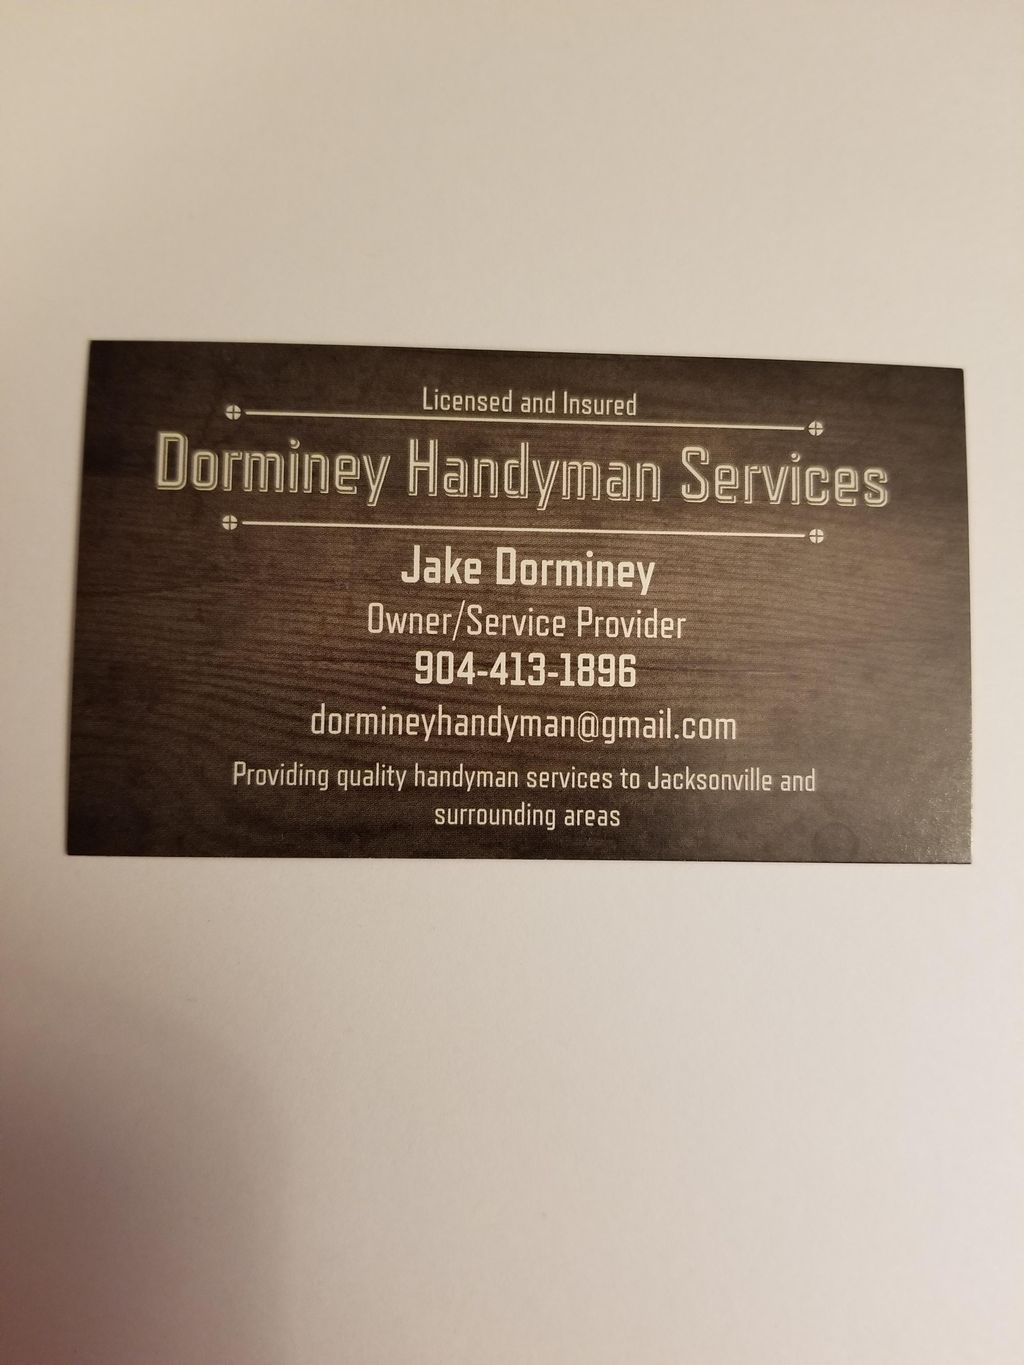 Dorminey Handyman Services